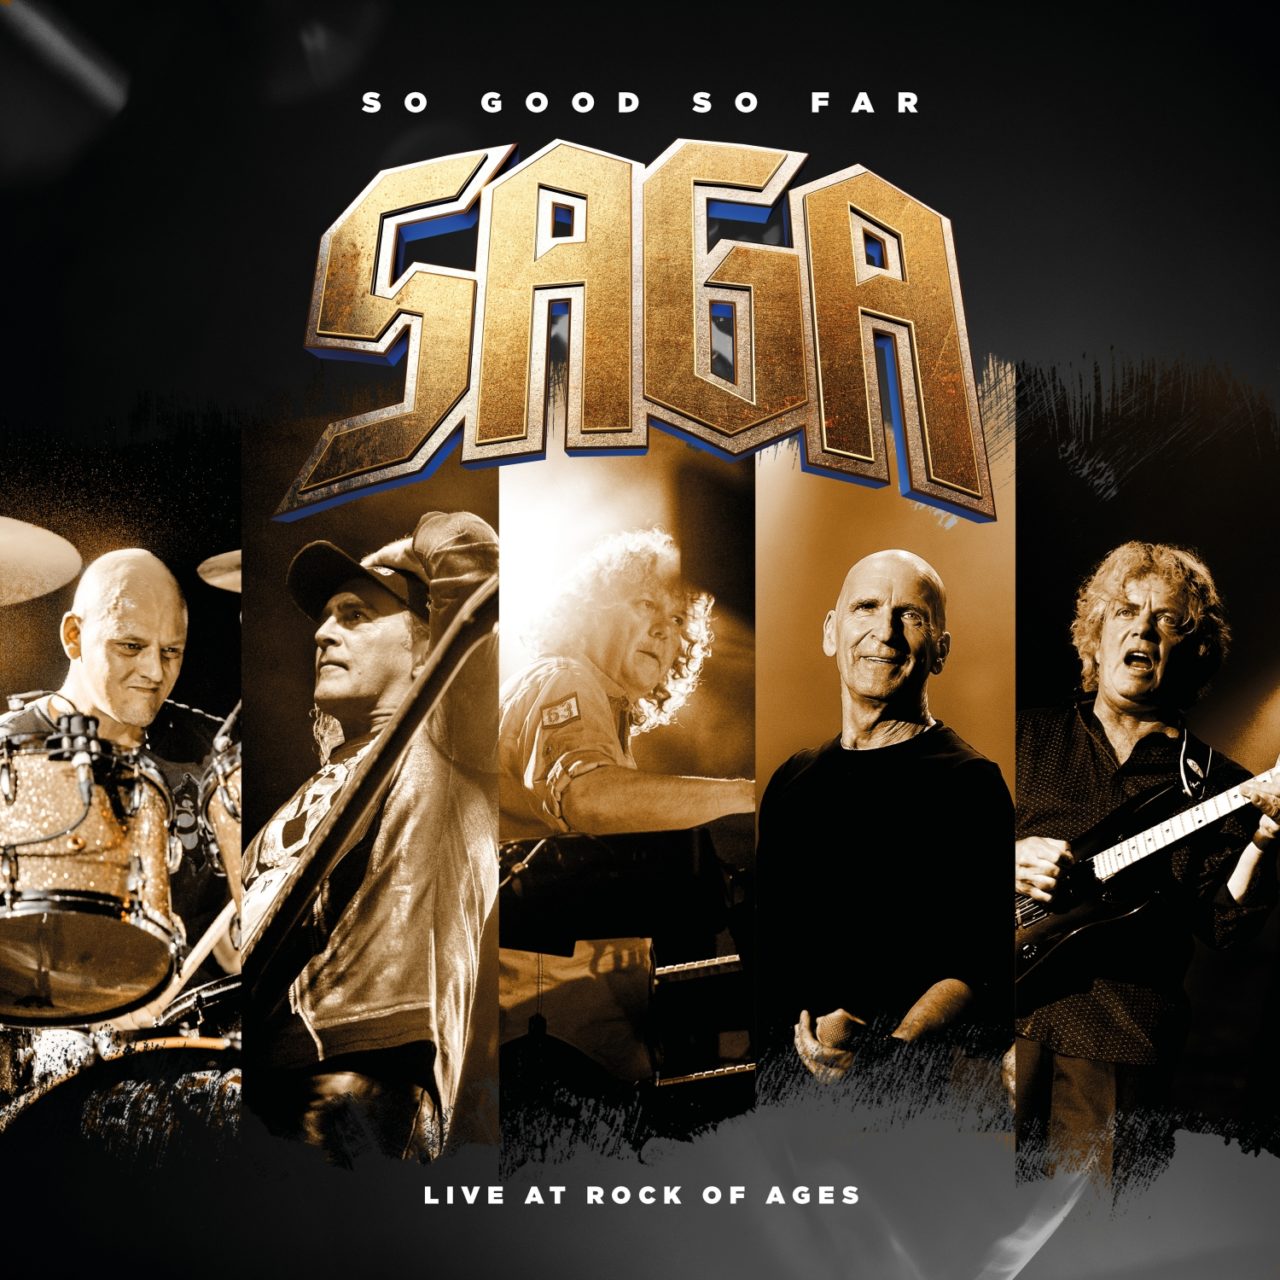 Saga - Band verkündet Auflösung • metal.de